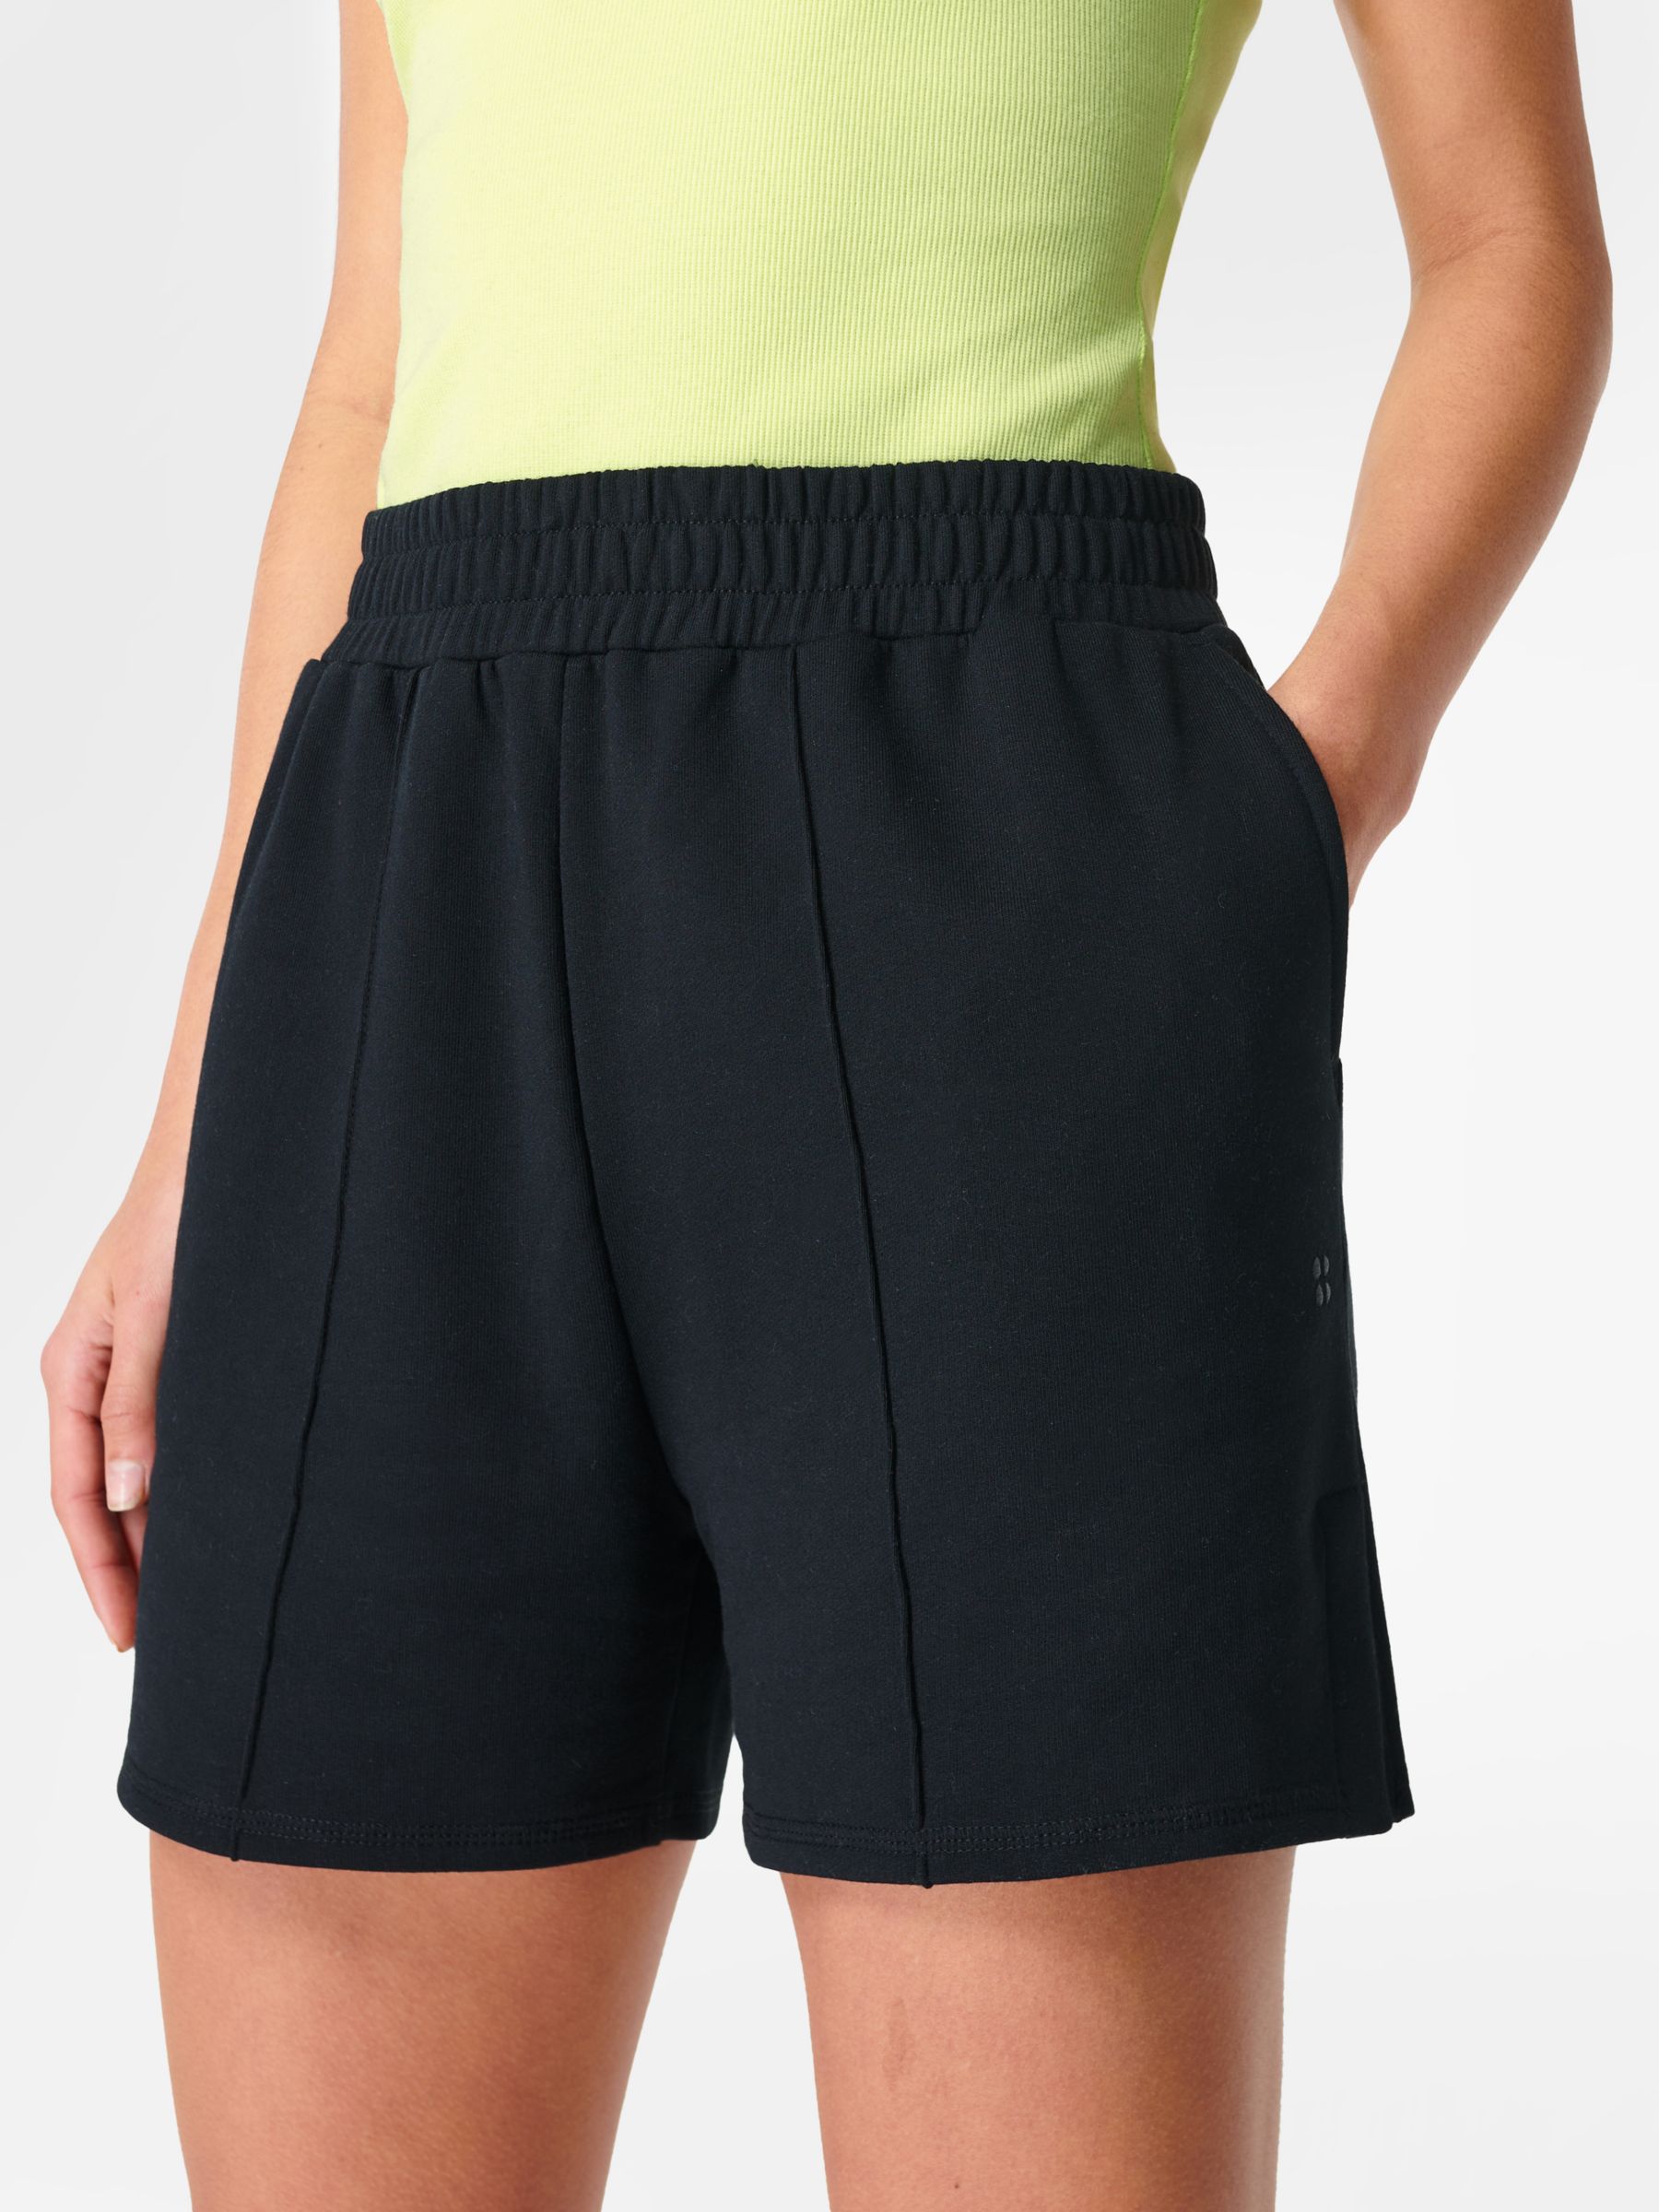 Sweaty Betty Organic Cotton Blend Shorts, Black, XXS